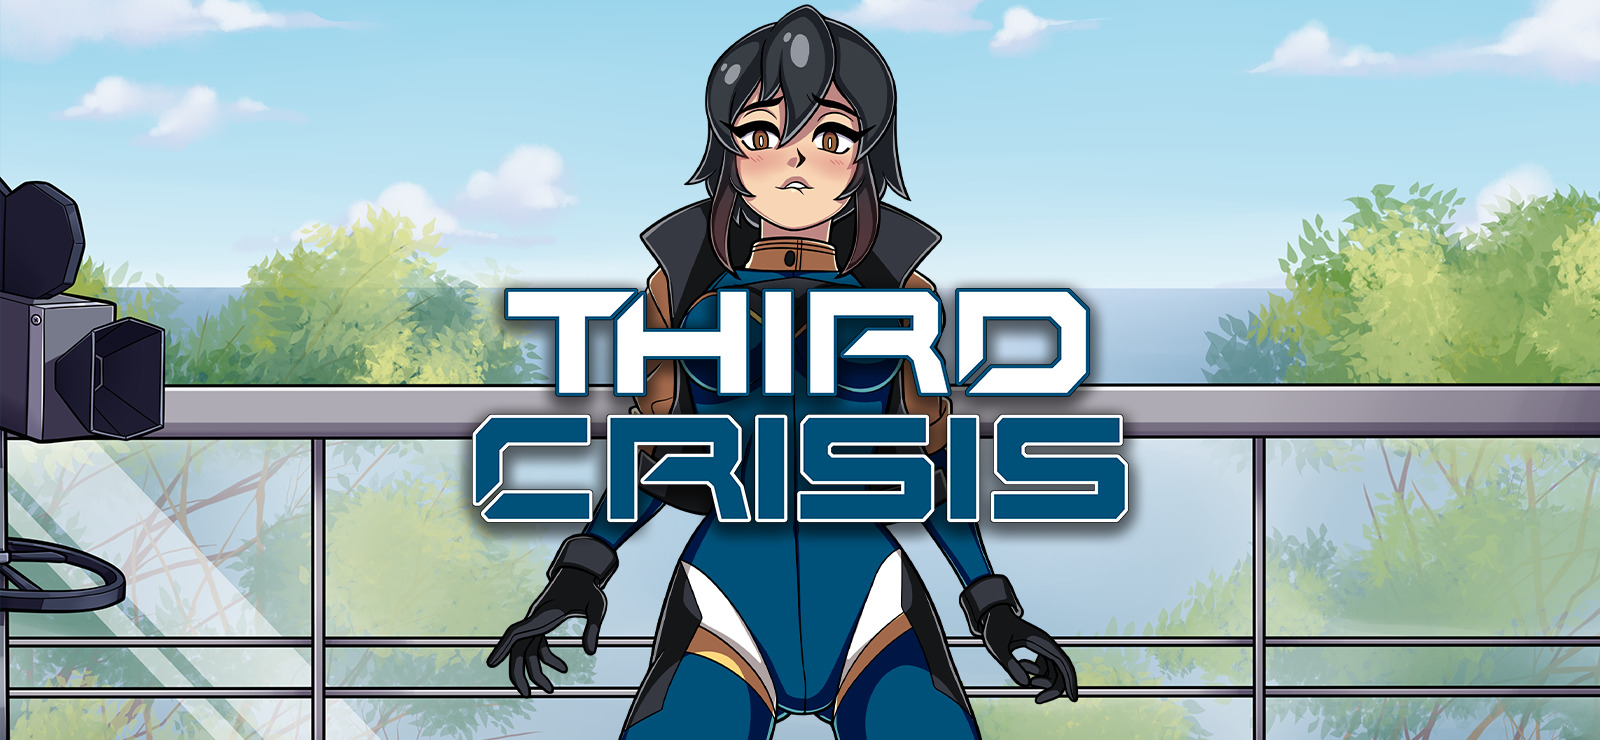 Third crisis